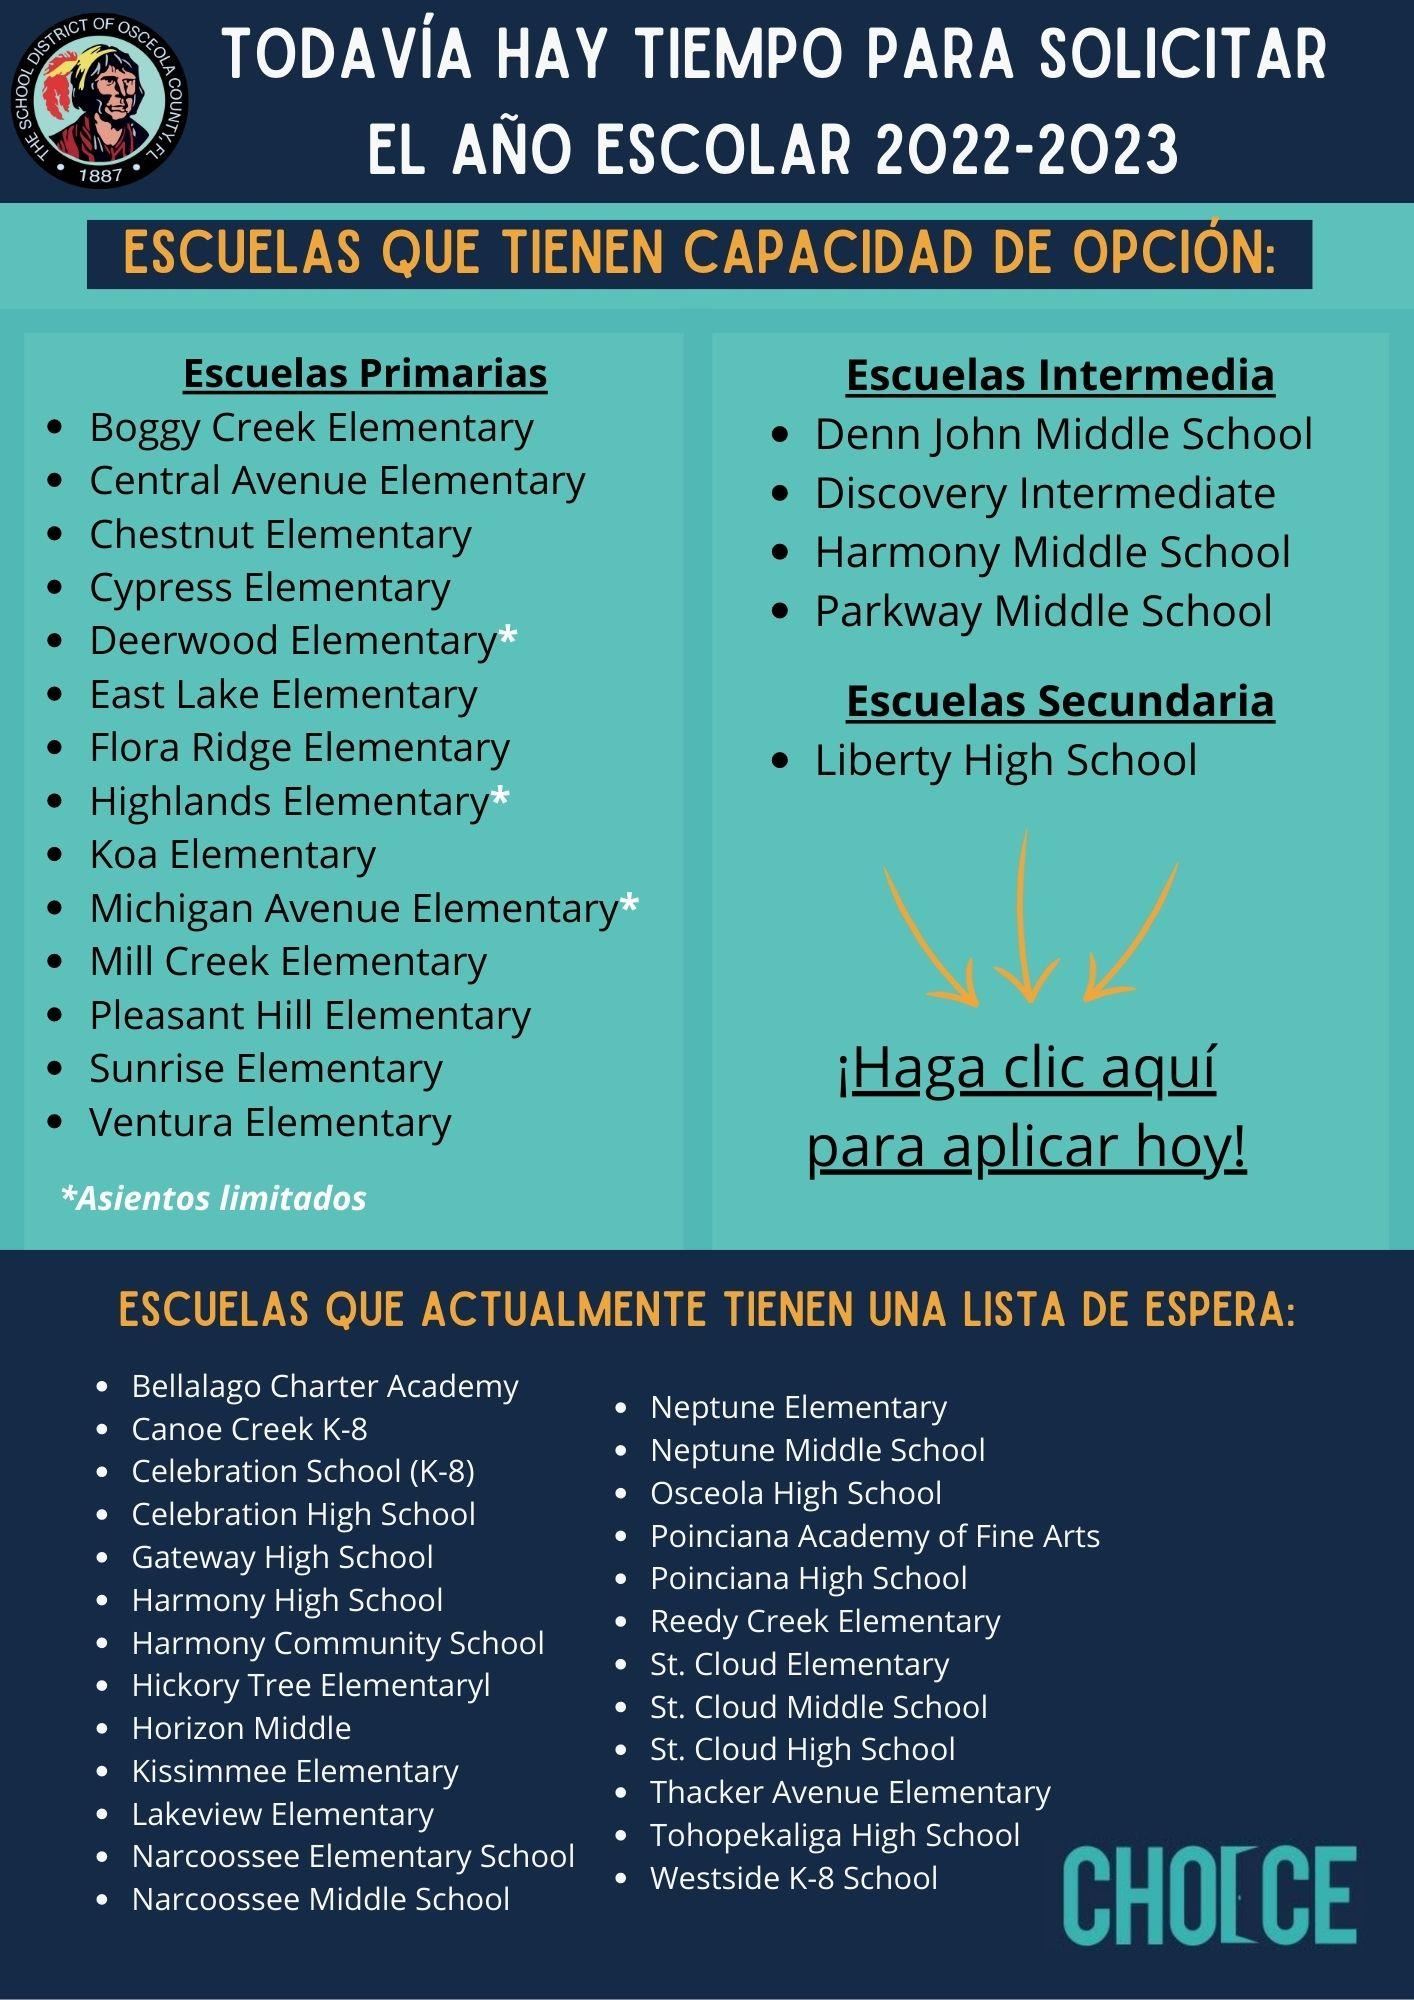 Spanish School list of schools that still have capacity 